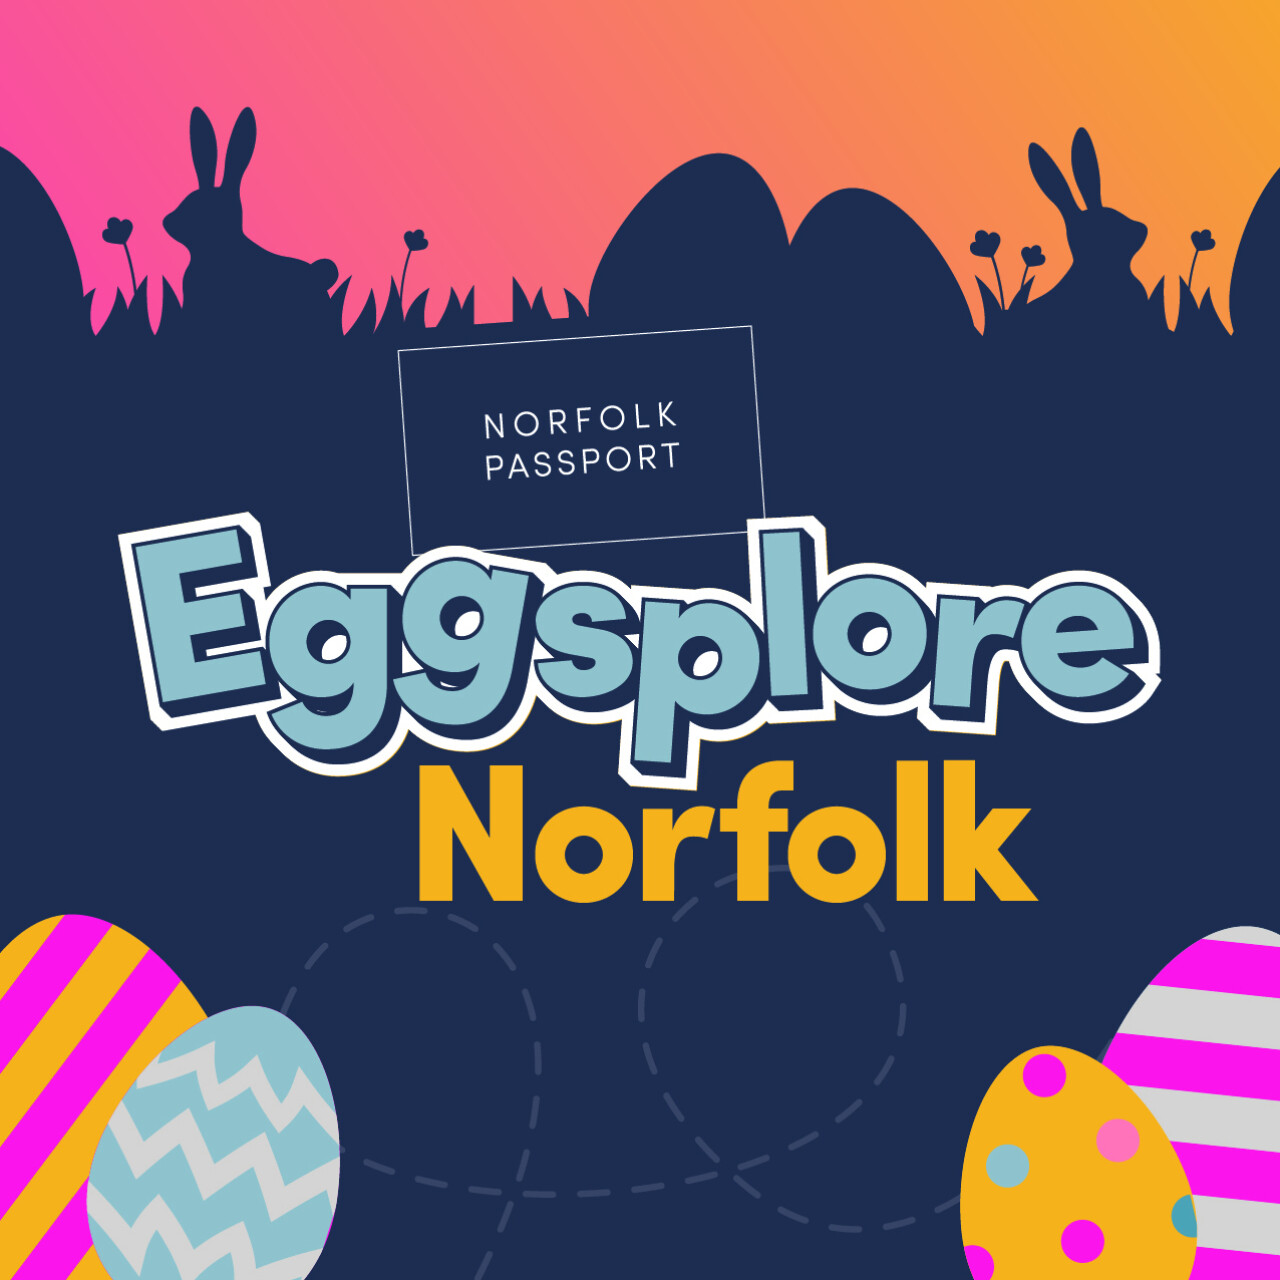 Norfolk Passport Eggsplore Norfolk Social Graphics